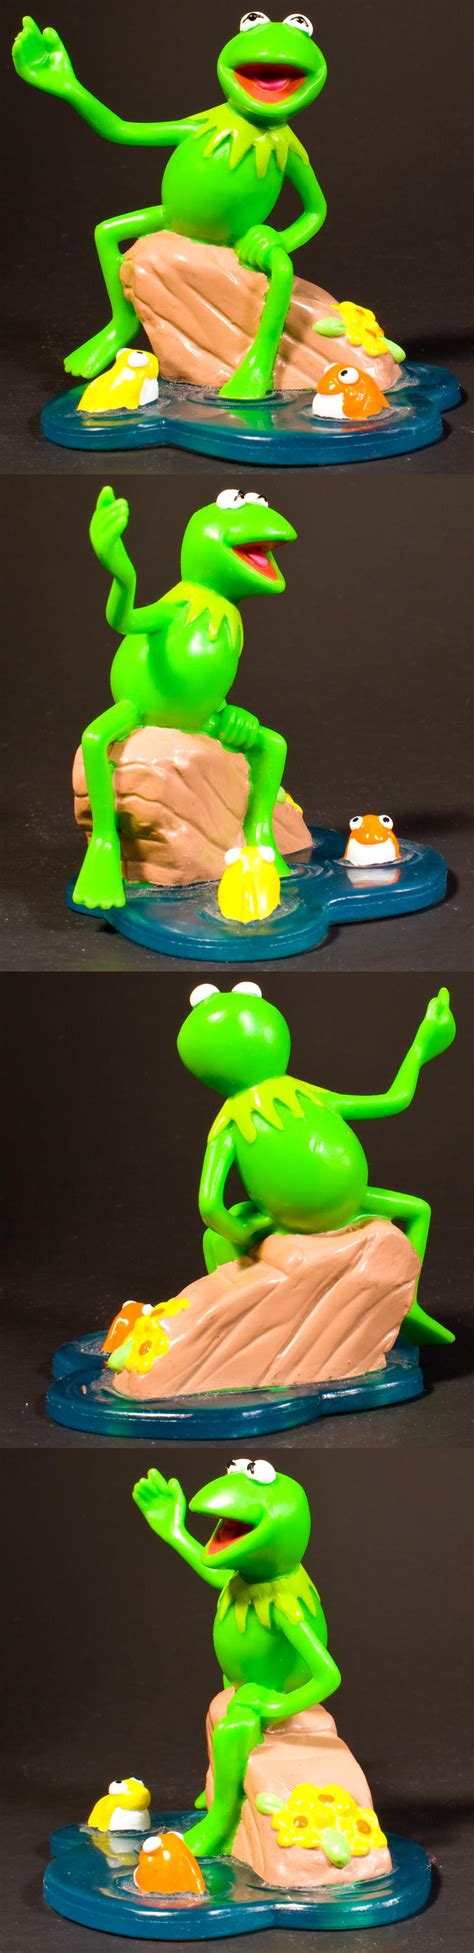 Kermit The Frog Toy By Aretestock On Deviantart